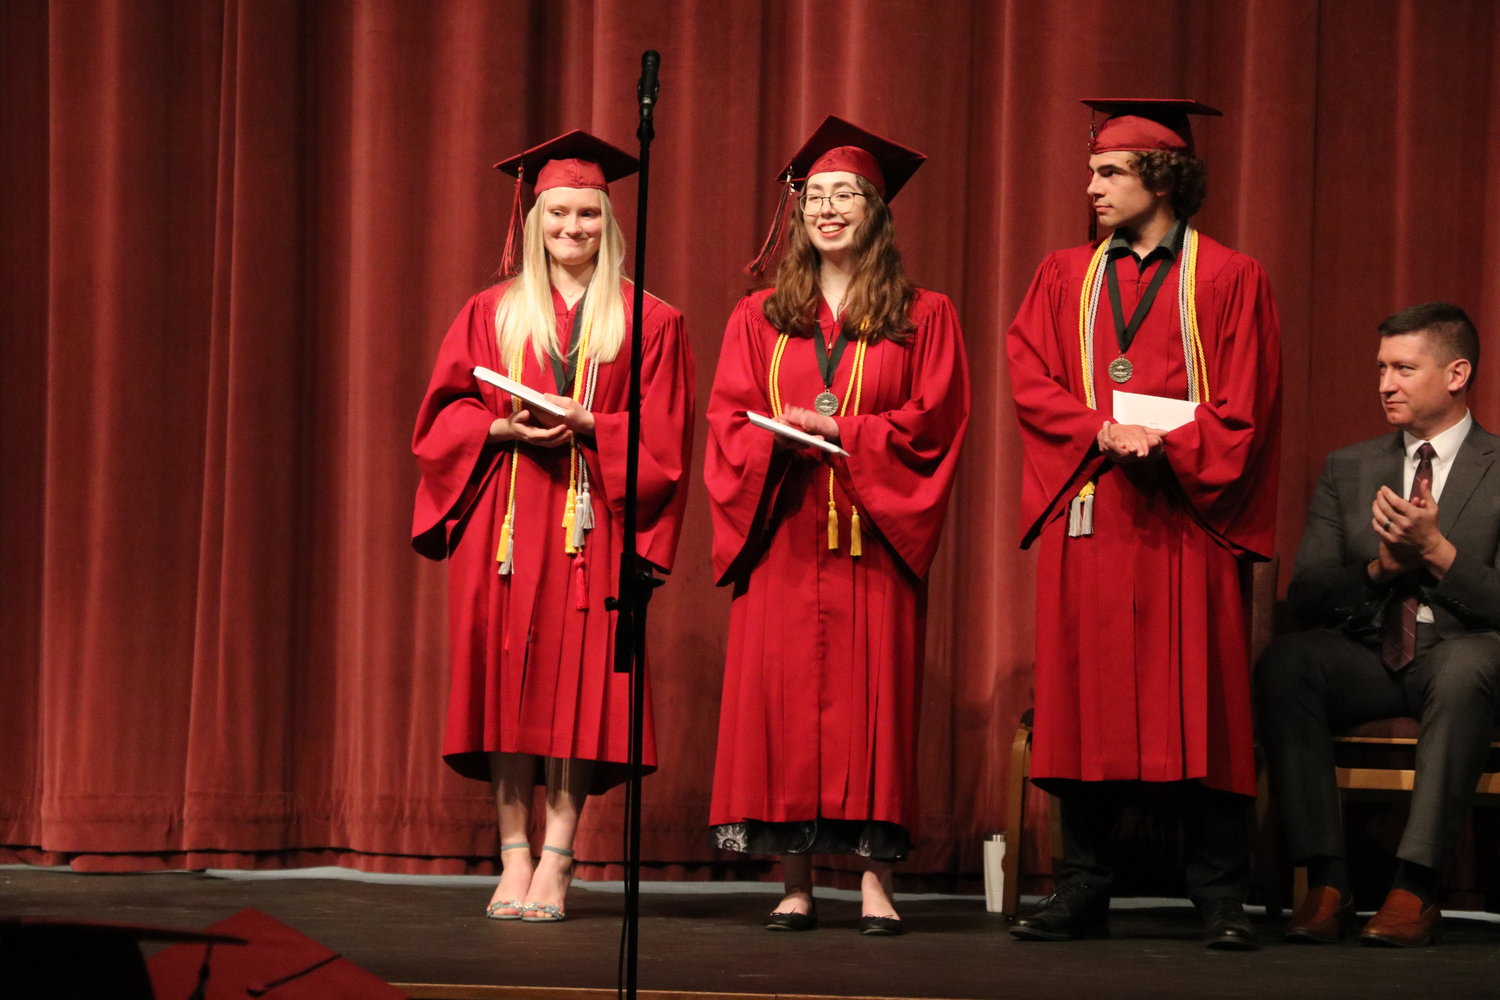 Left to right: Kyleigh Dolan, valedictorian; Ivana Ebersole, salutatorian; and Noah Miller, salutatorian.